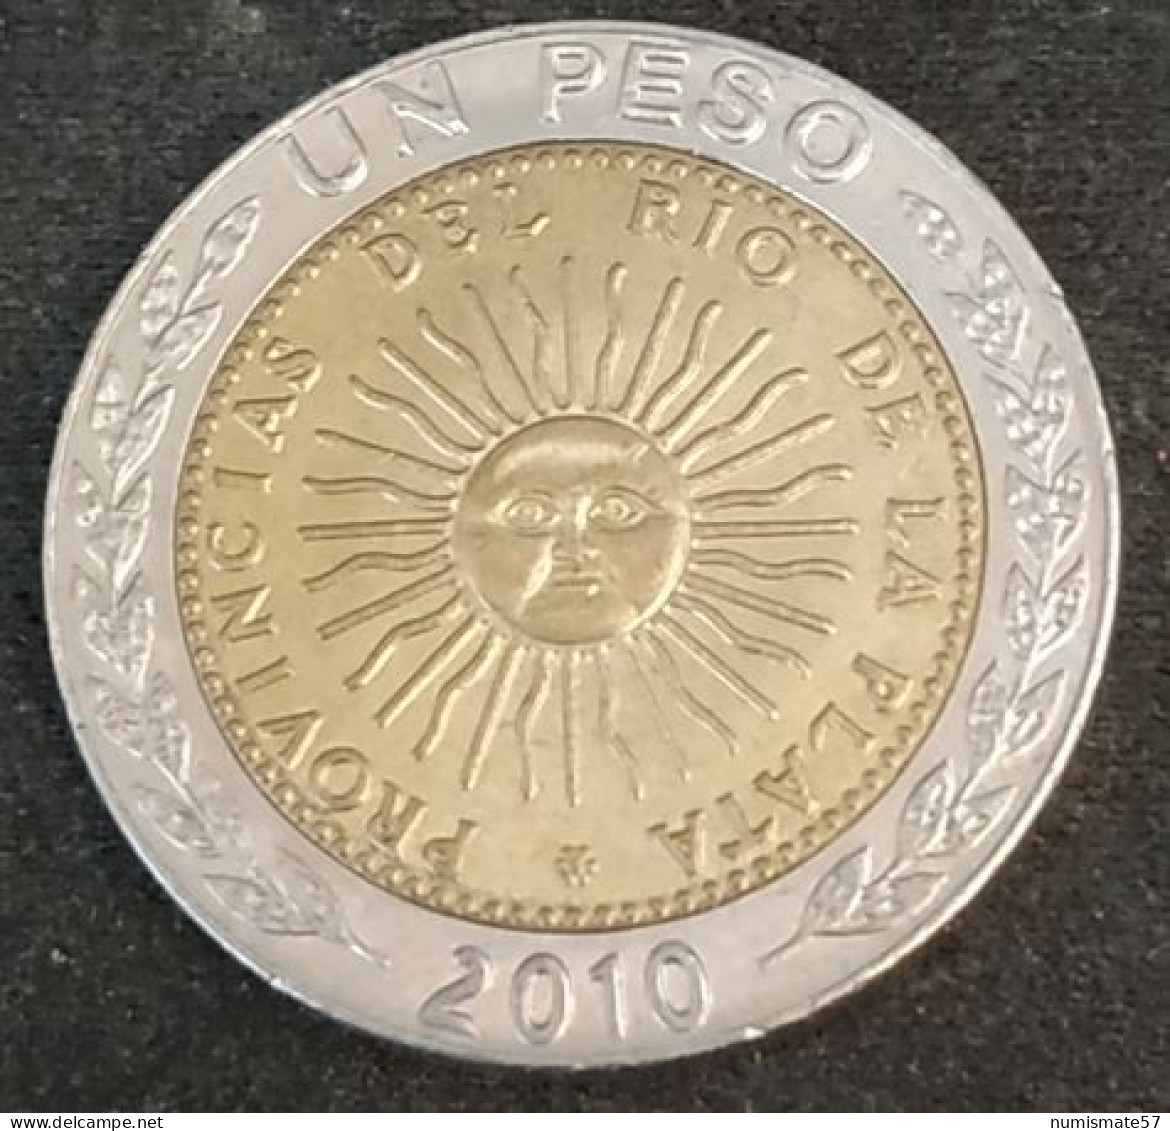 ARGENTINE - ARGENTINA - 1 PESO 2010 E ( Italy Mint ) - KM 112.1 - Argentina